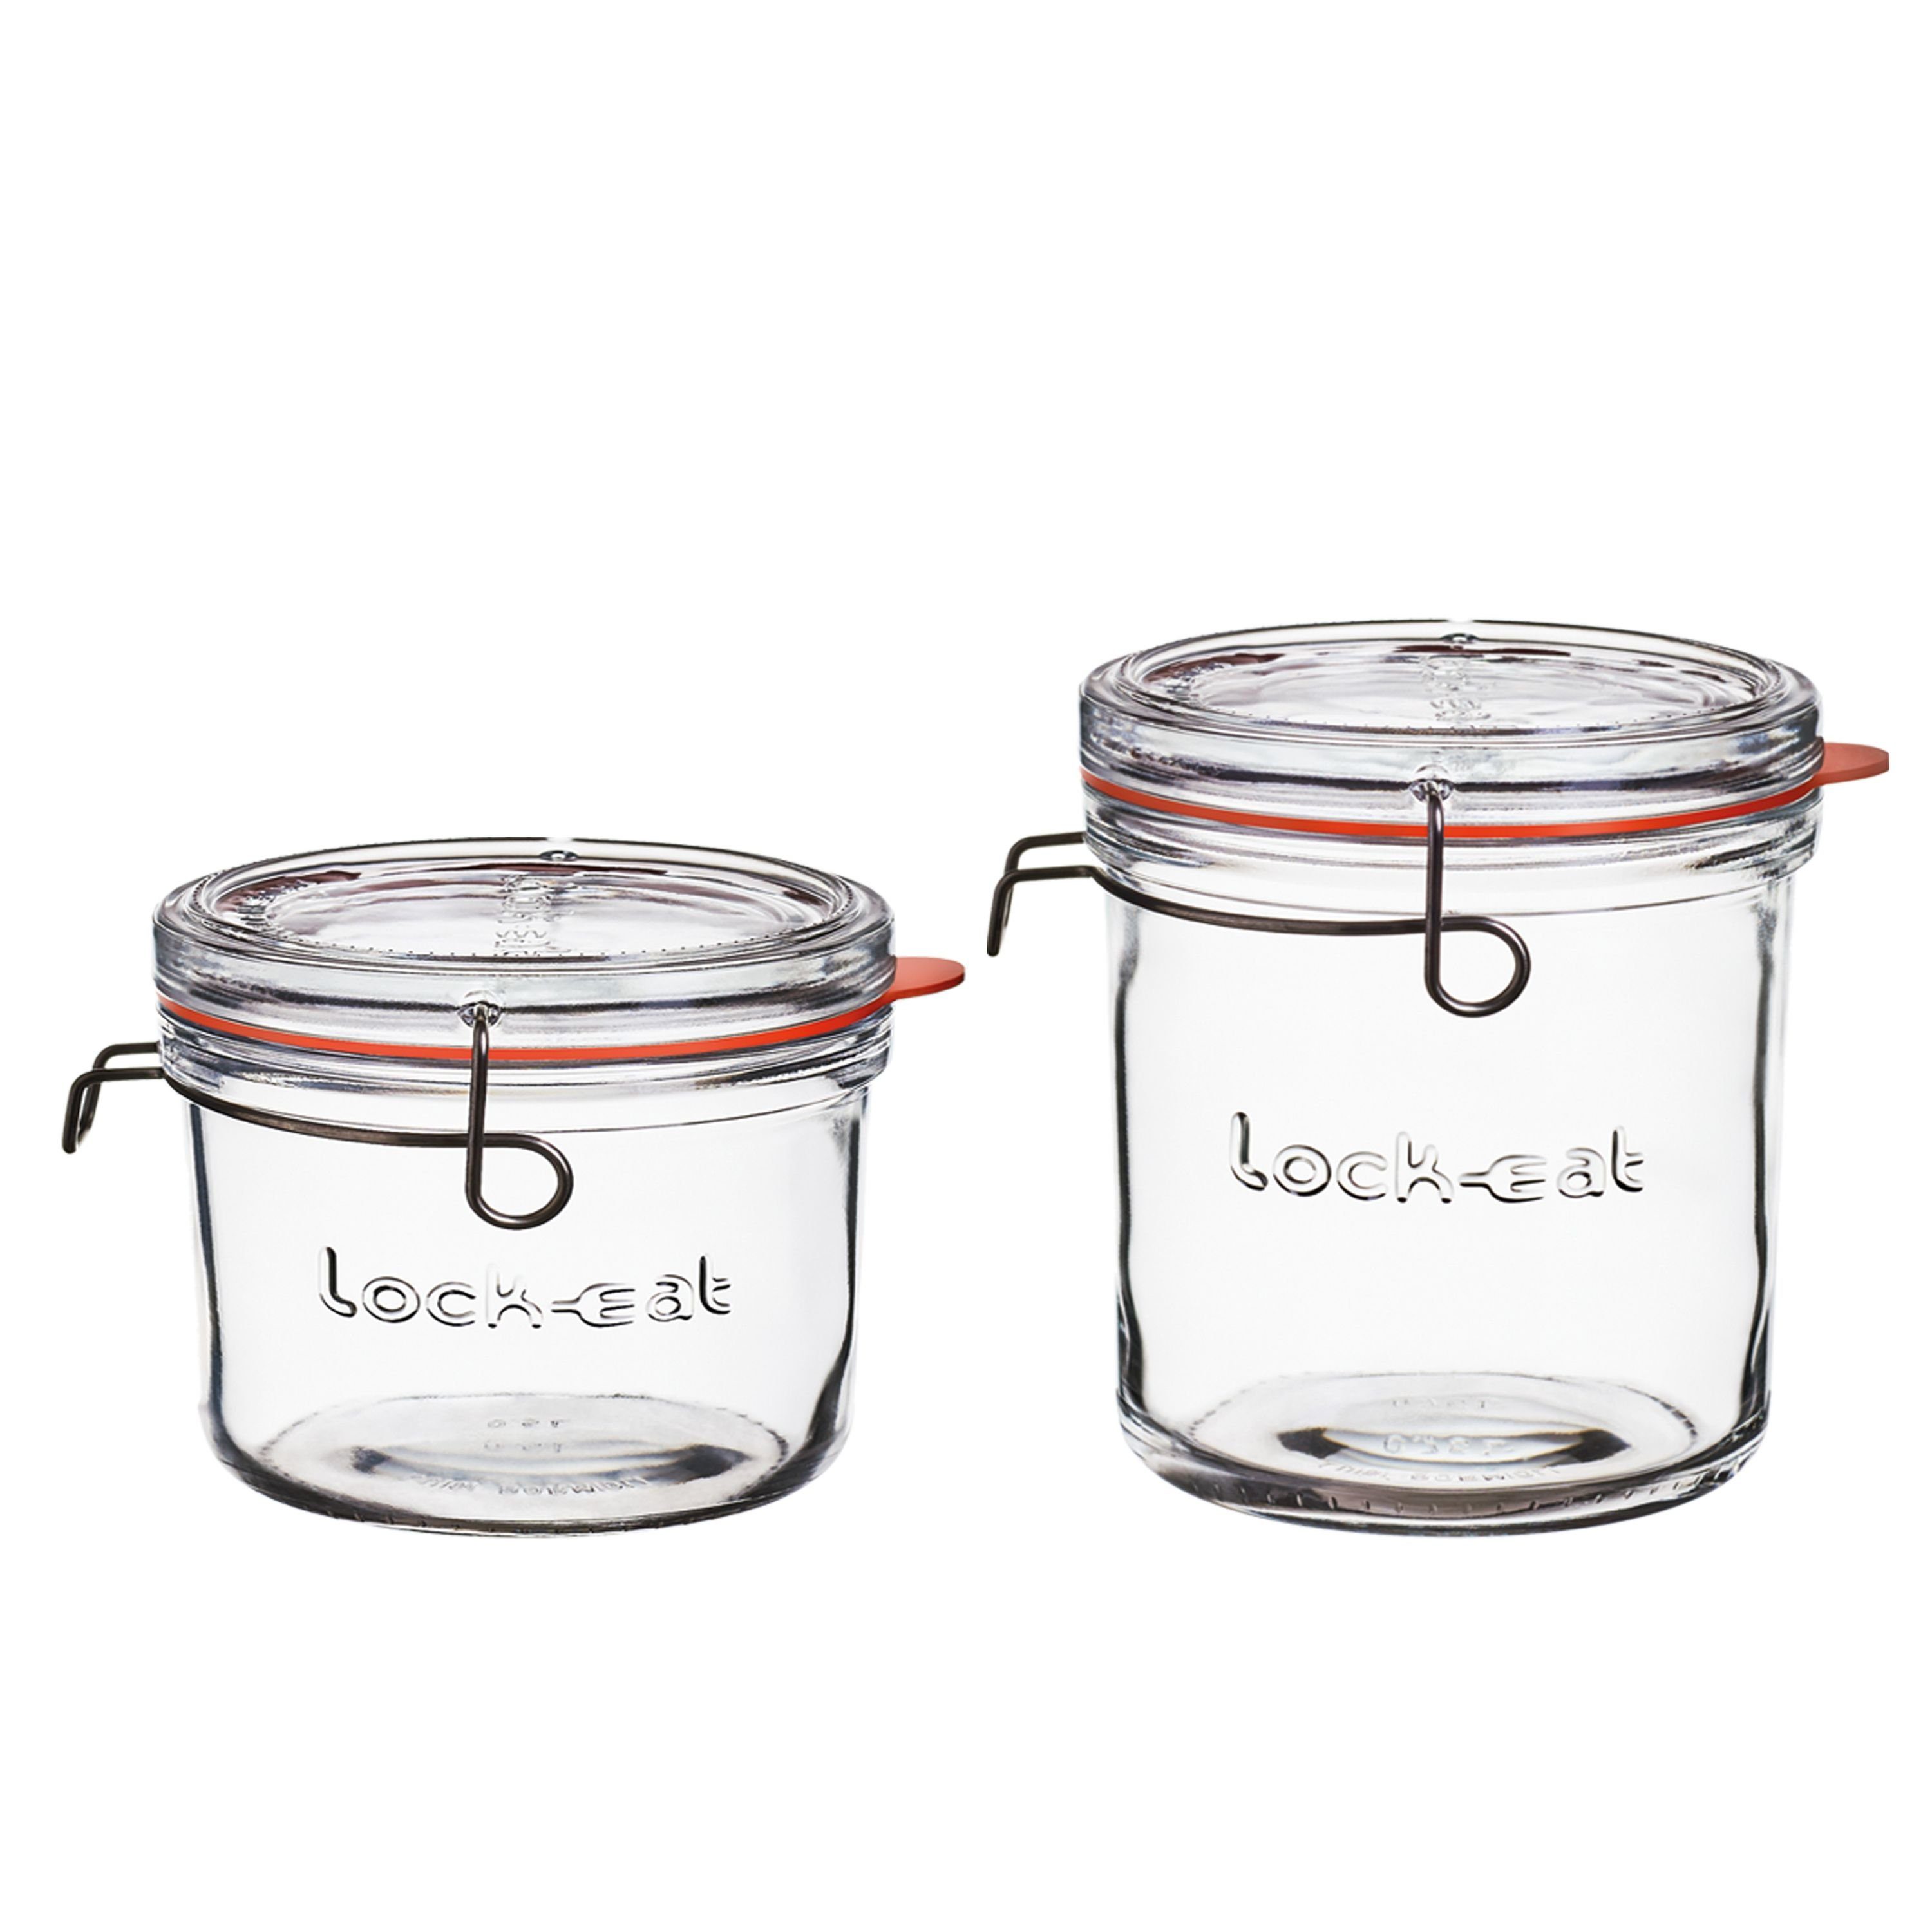 Deckel Lock-Eat Luigi Vorratsglas mit Set 0,75L, 2er 0,5L + - Bormioli Glas Einmachgläser